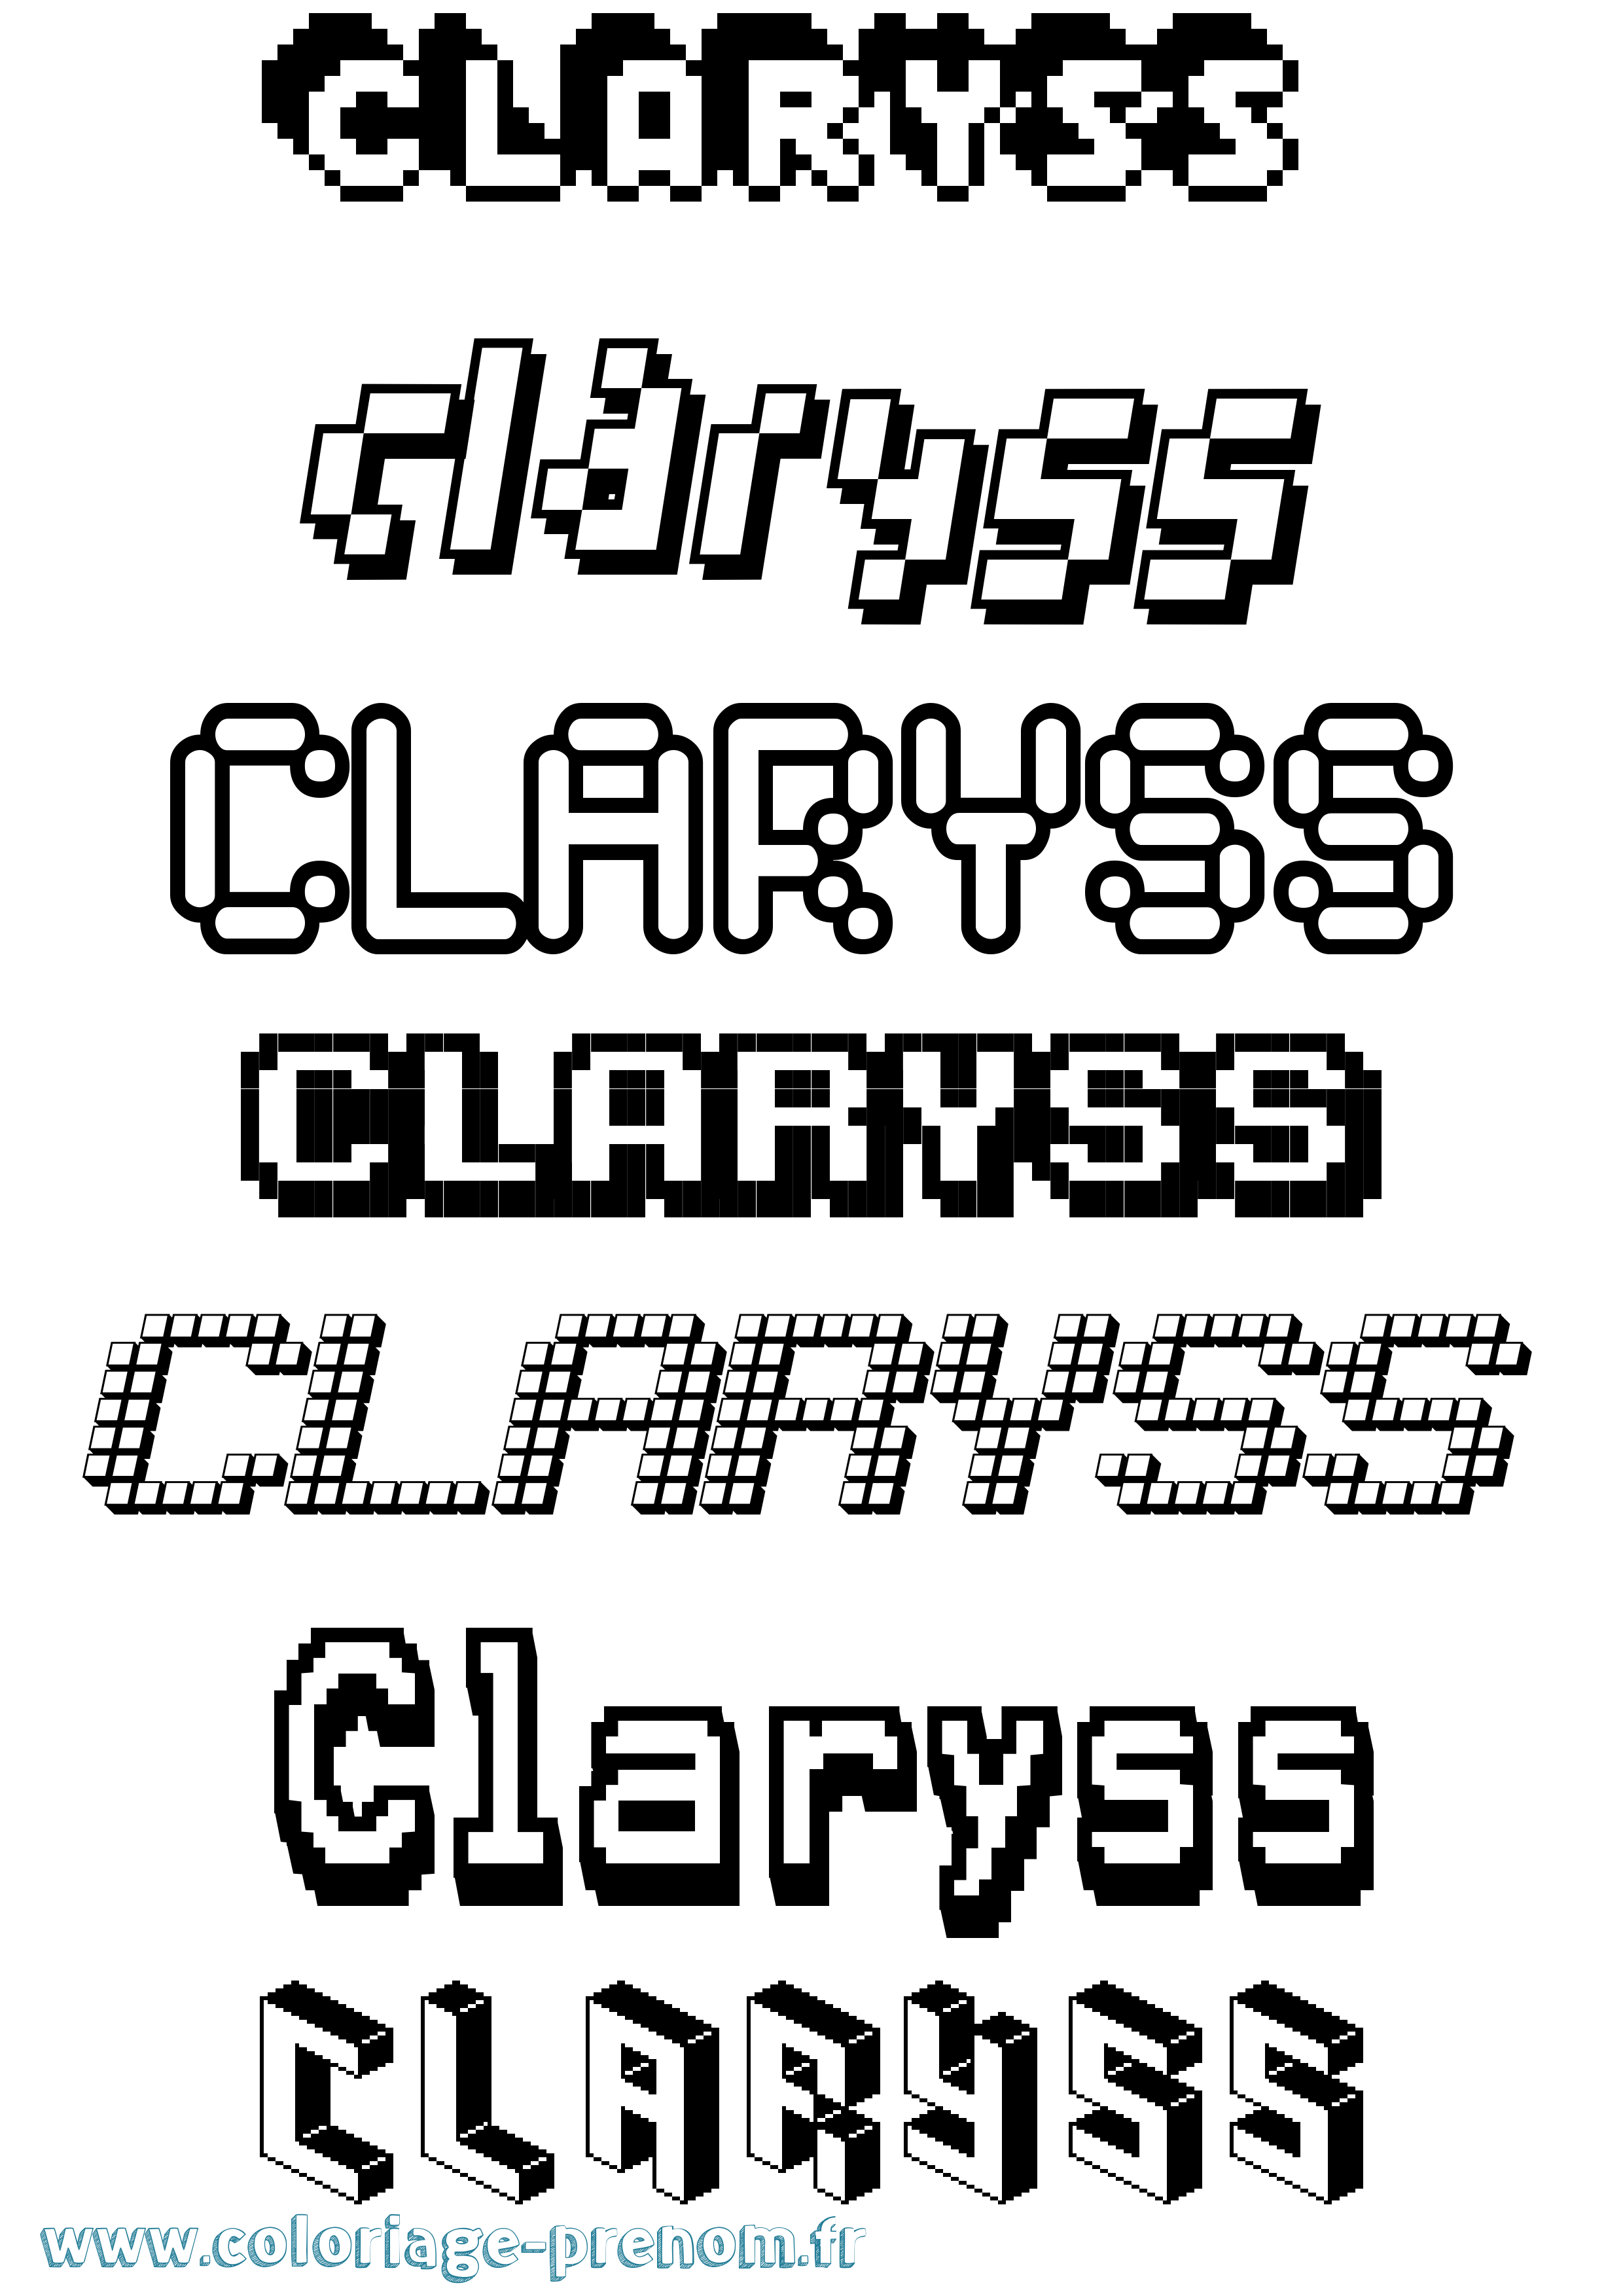 Coloriage prénom Claryss Pixel